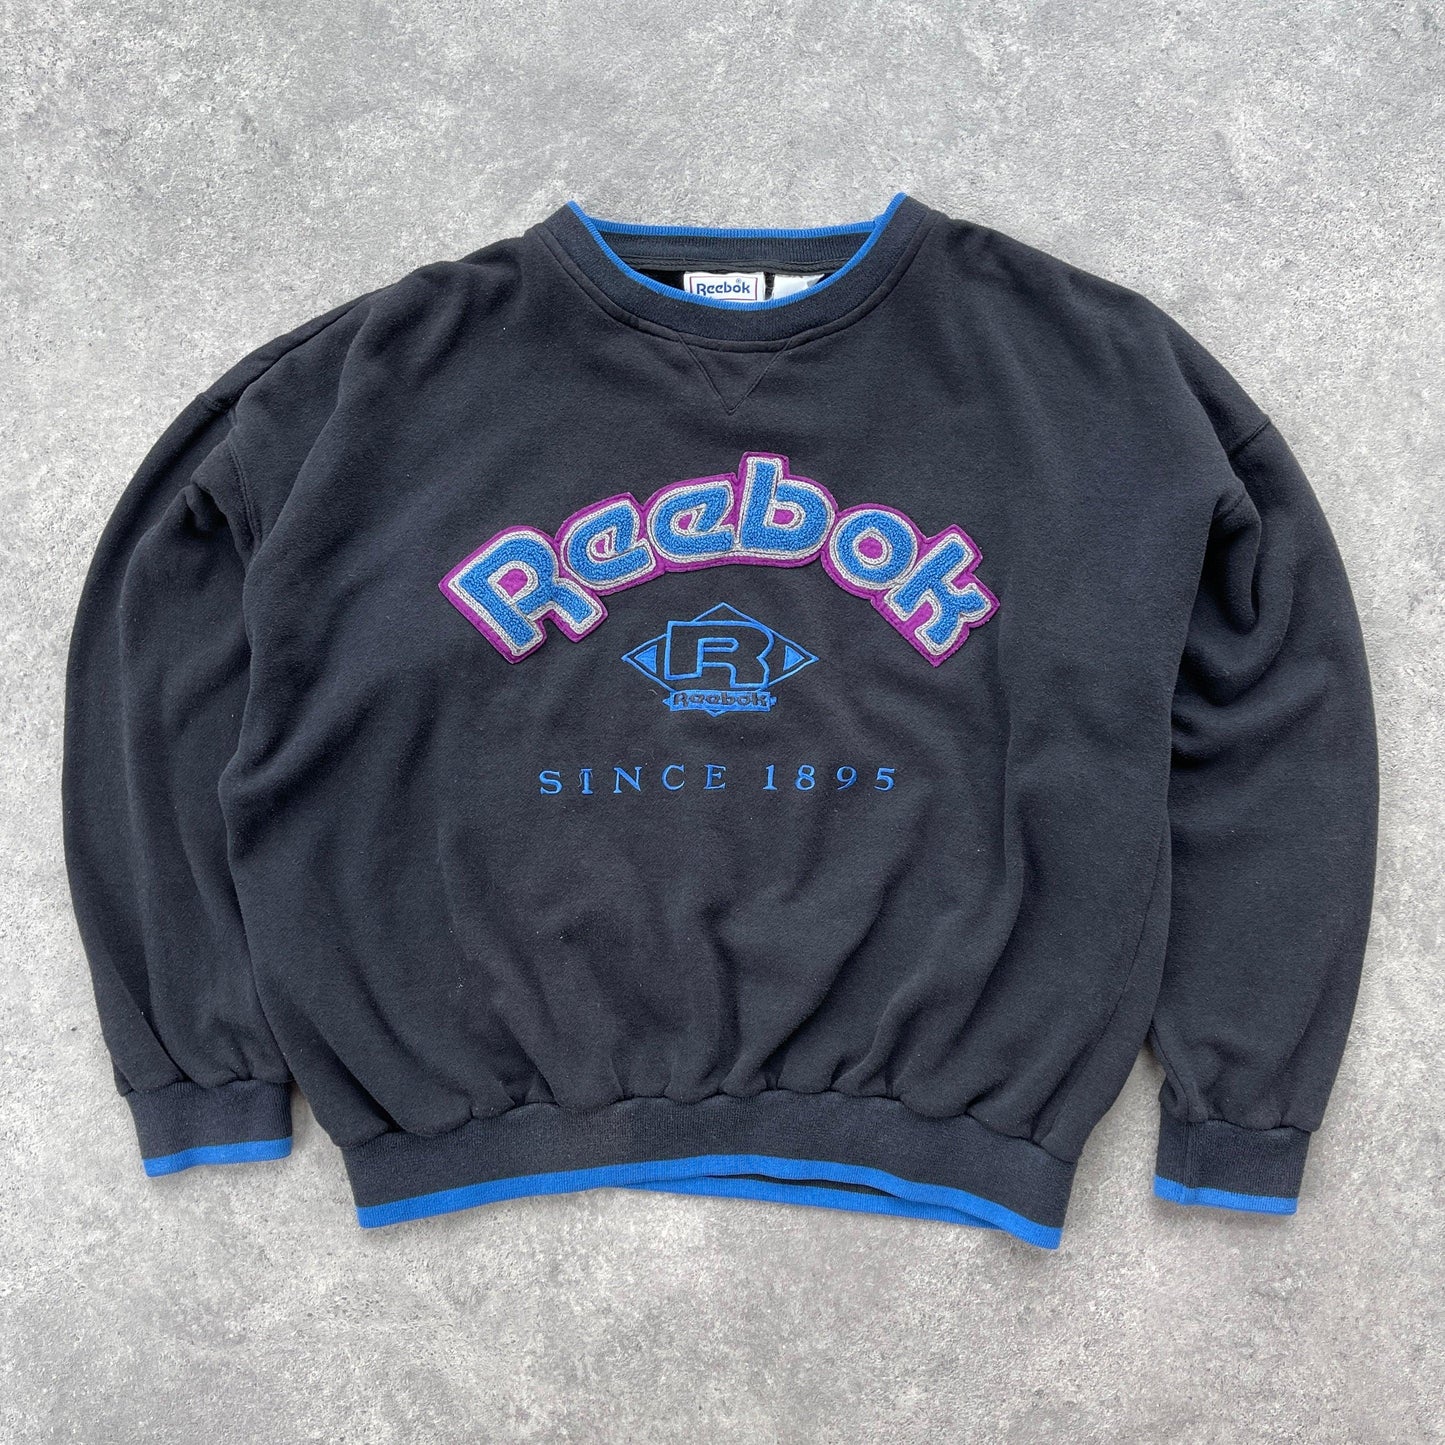 Reebok 1990s heavyweight embroidered sweatshirt (L) - Known Source